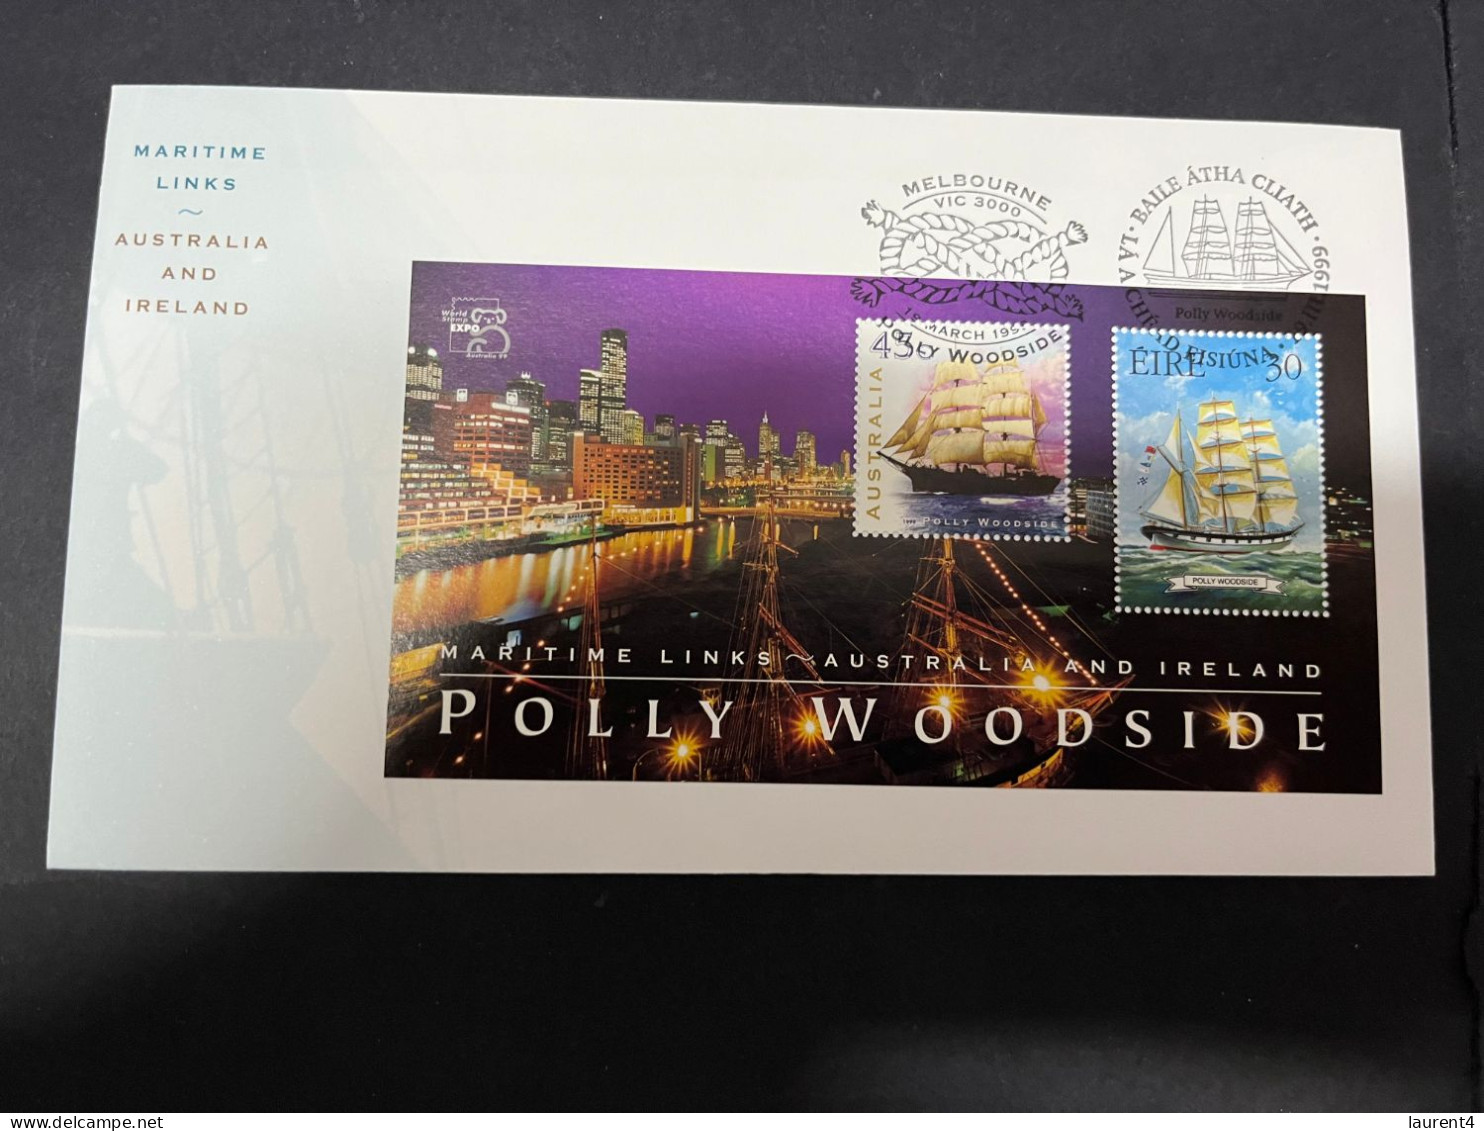 14-5-2024 (5 Z 9) Australia FDC - 1999 - (1 Cover) - Melbourne Stamp Show - Ireland / Australia Joint Issue (Polly Ship) - Primo Giorno D'emissione (FDC)